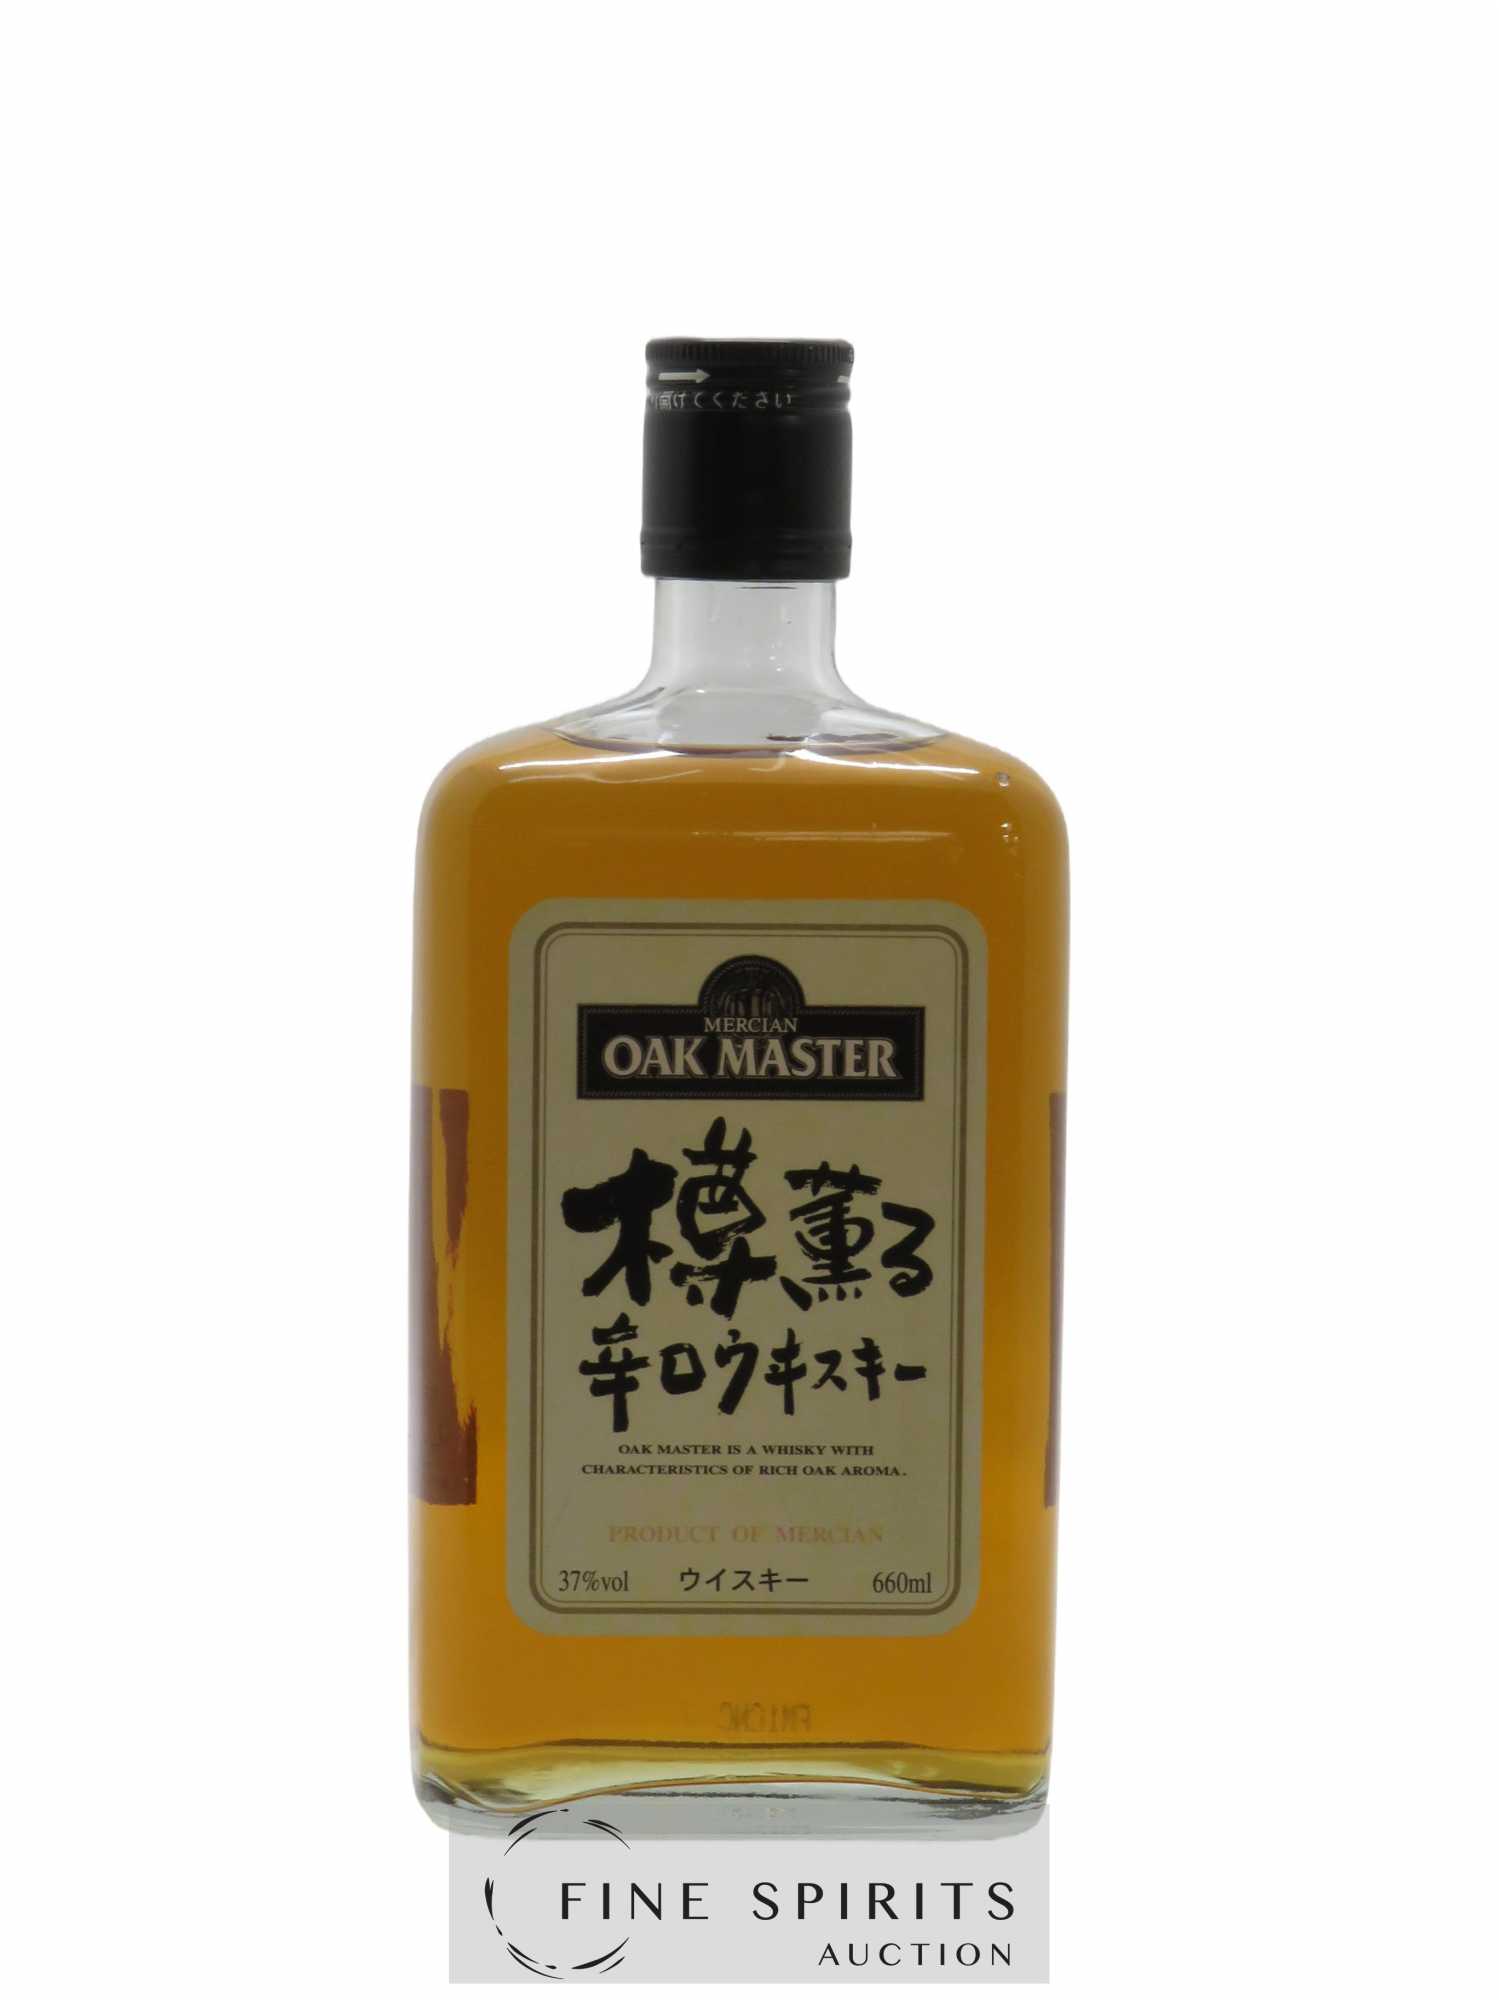 Karuizawa Of. Mercian Oak Master